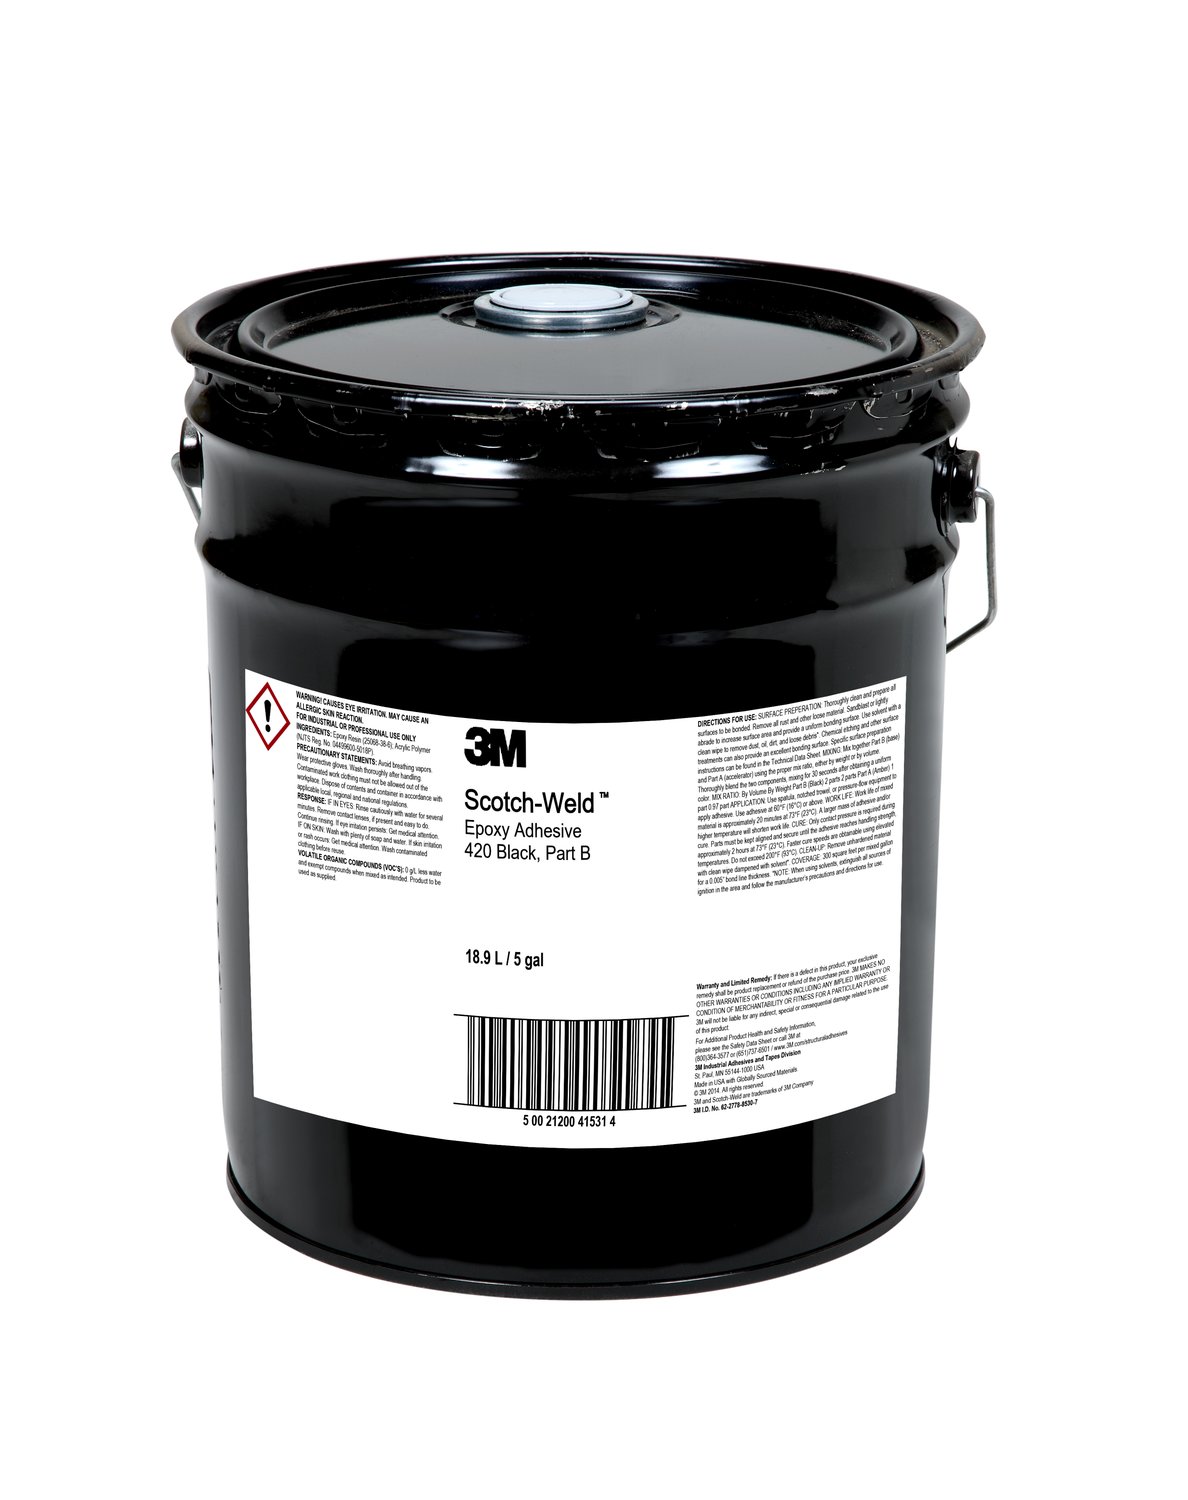 7000000827 - 3M Scotch-Weld Epoxy Adhesive 420, Black, Part B, 5 Gallon (Pail), 1
Can/Drum